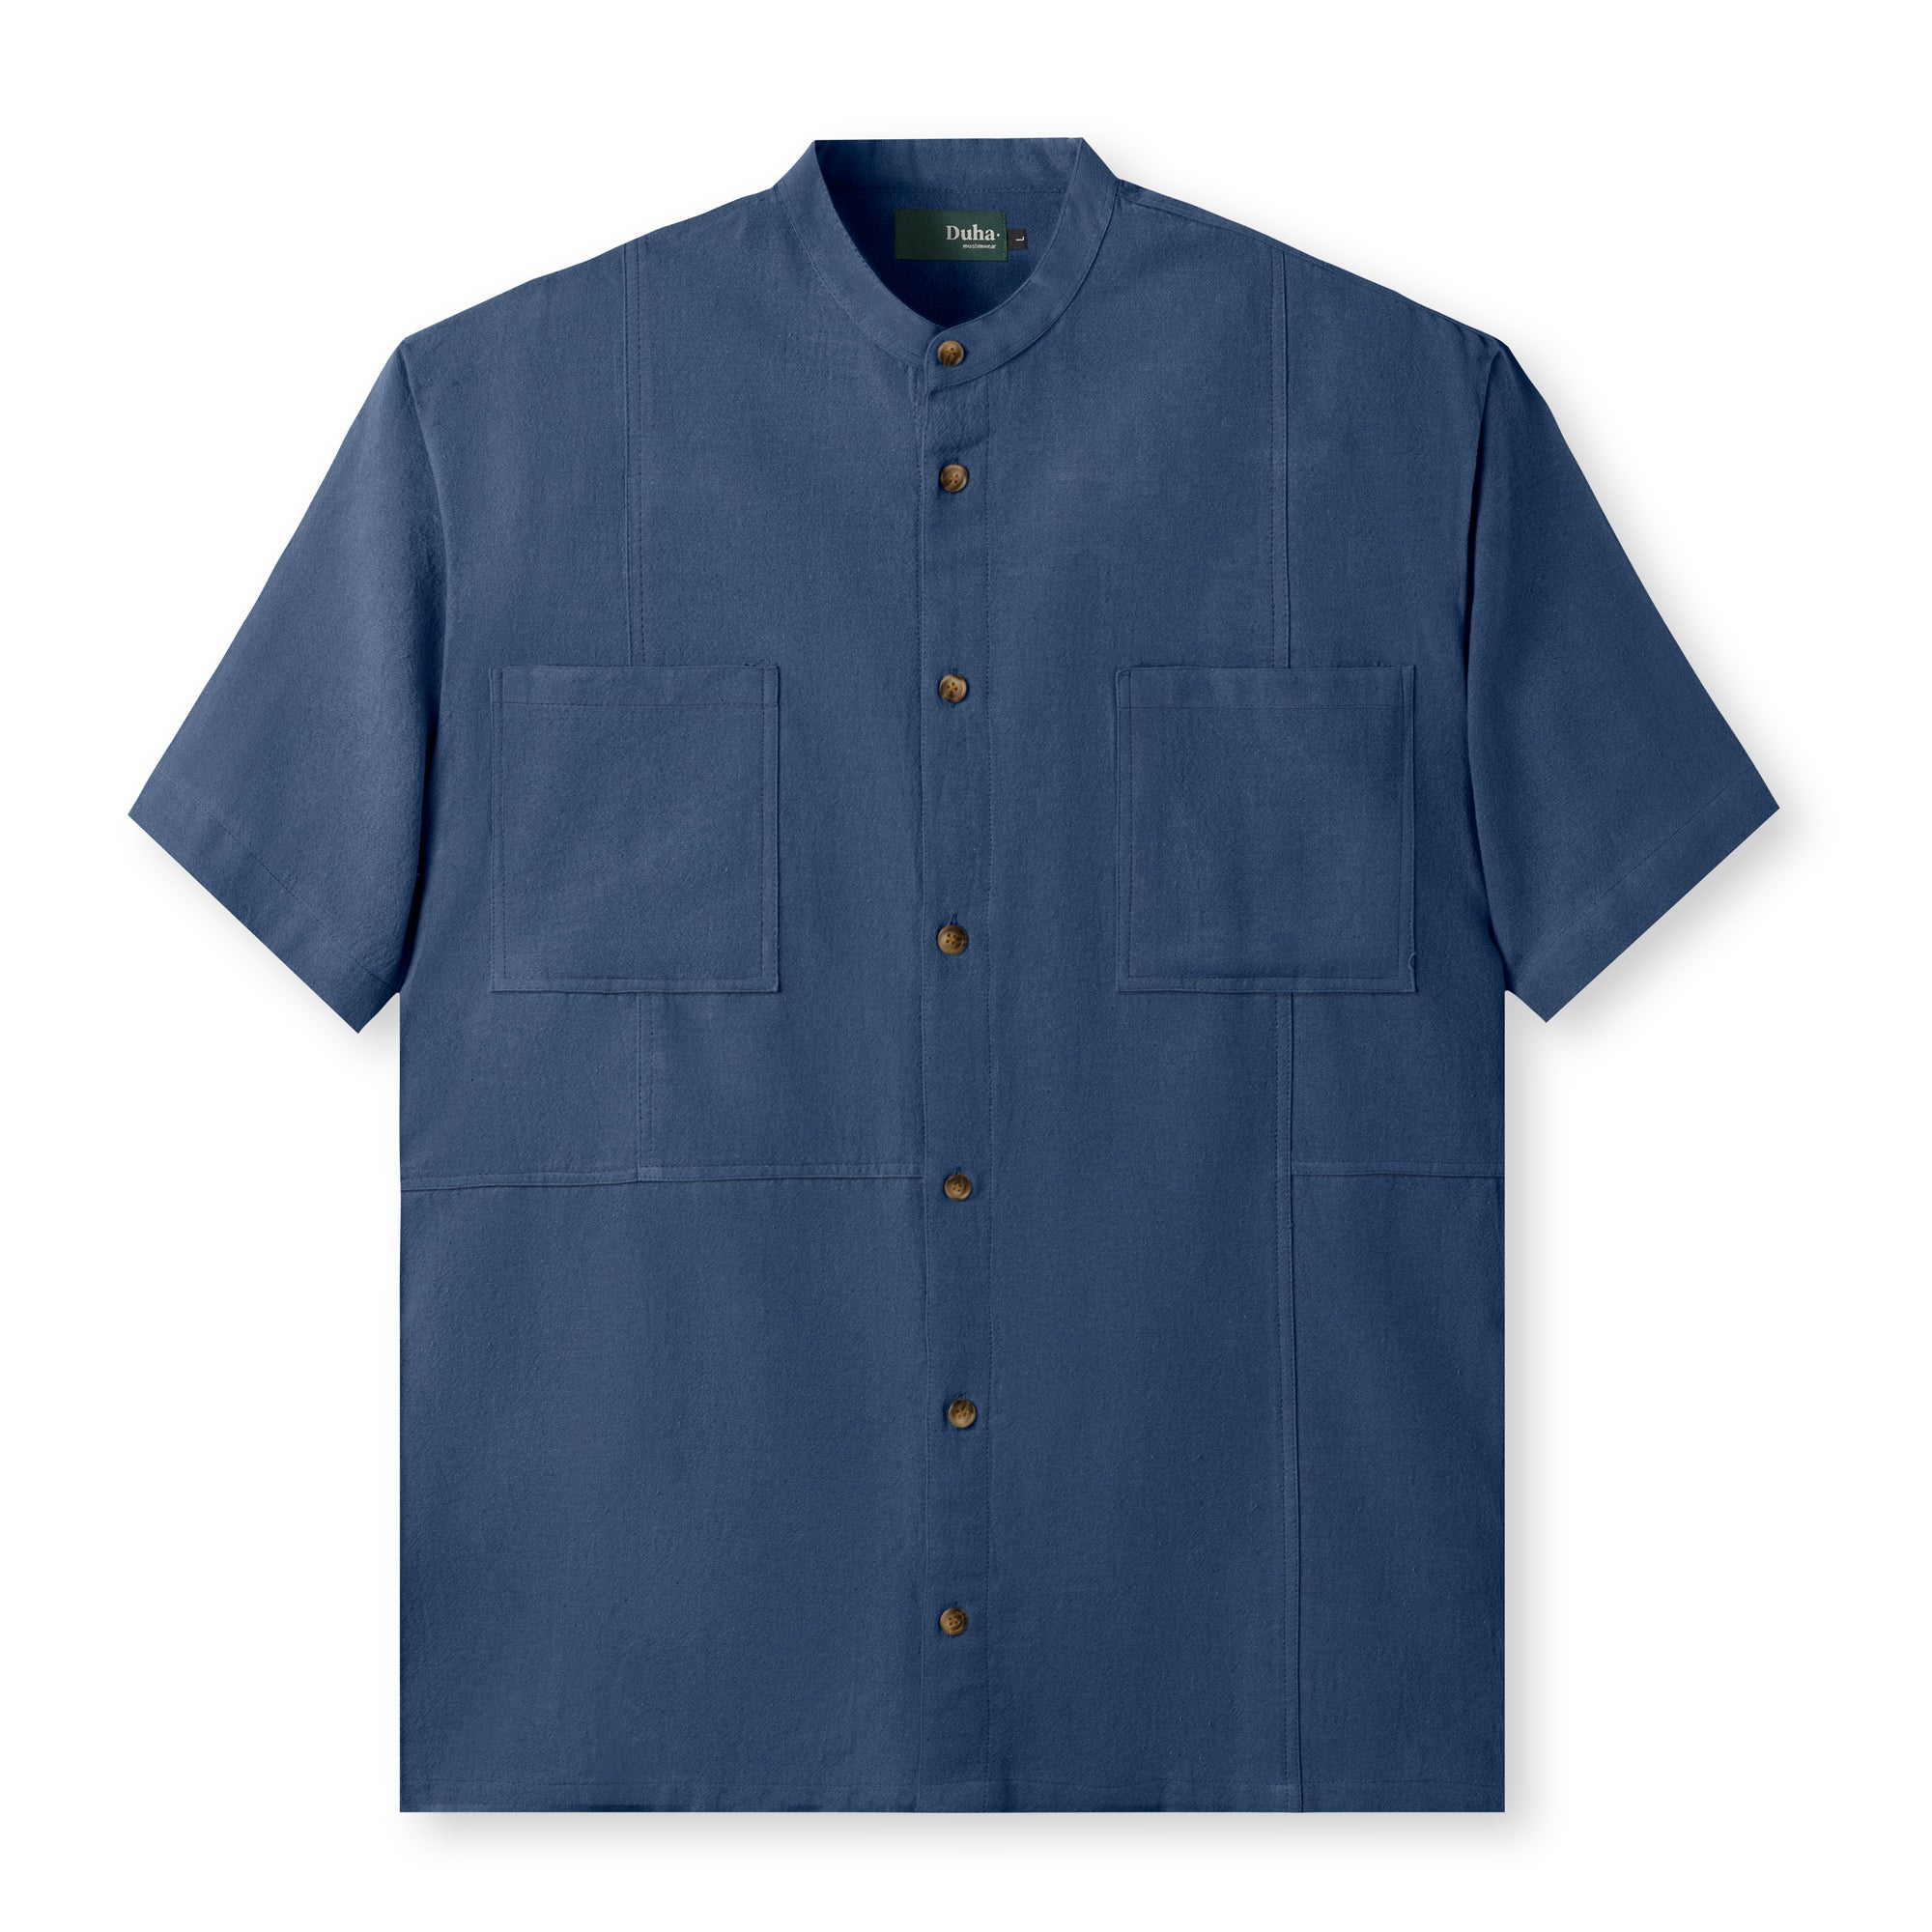 FACTORY SALE - Zahi Short Sleeve Shirt - Deep Blue